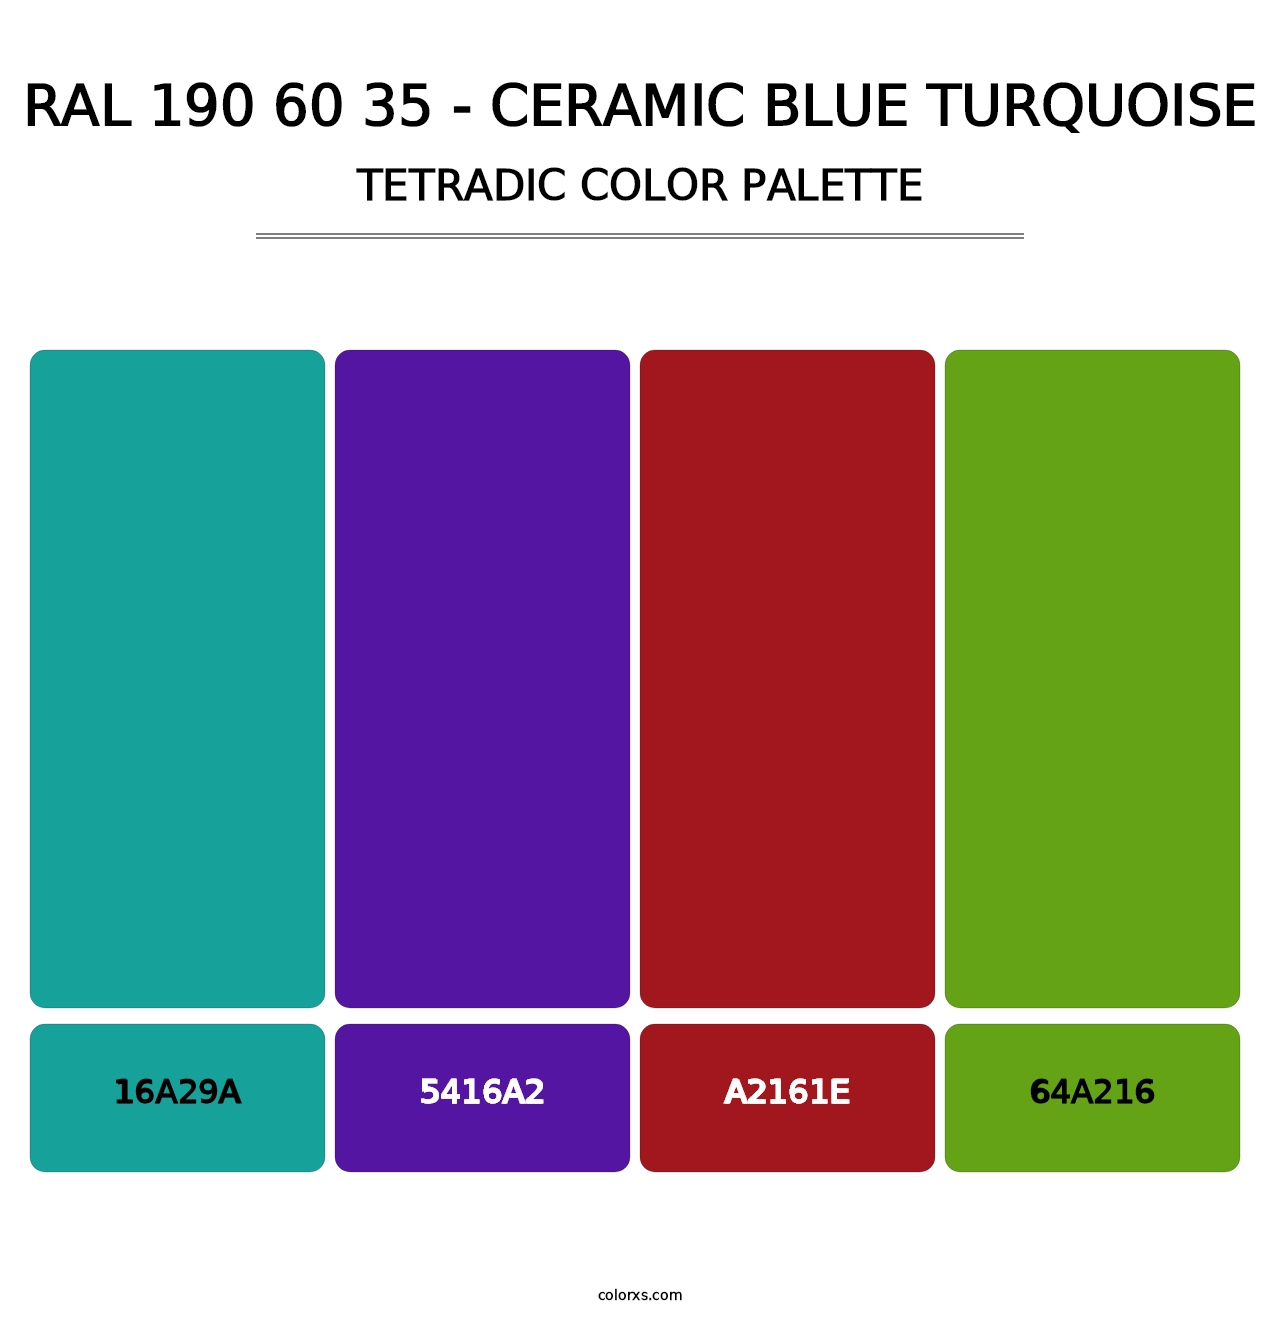 RAL 190 60 35 - Ceramic Blue Turquoise - Tetradic Color Palette